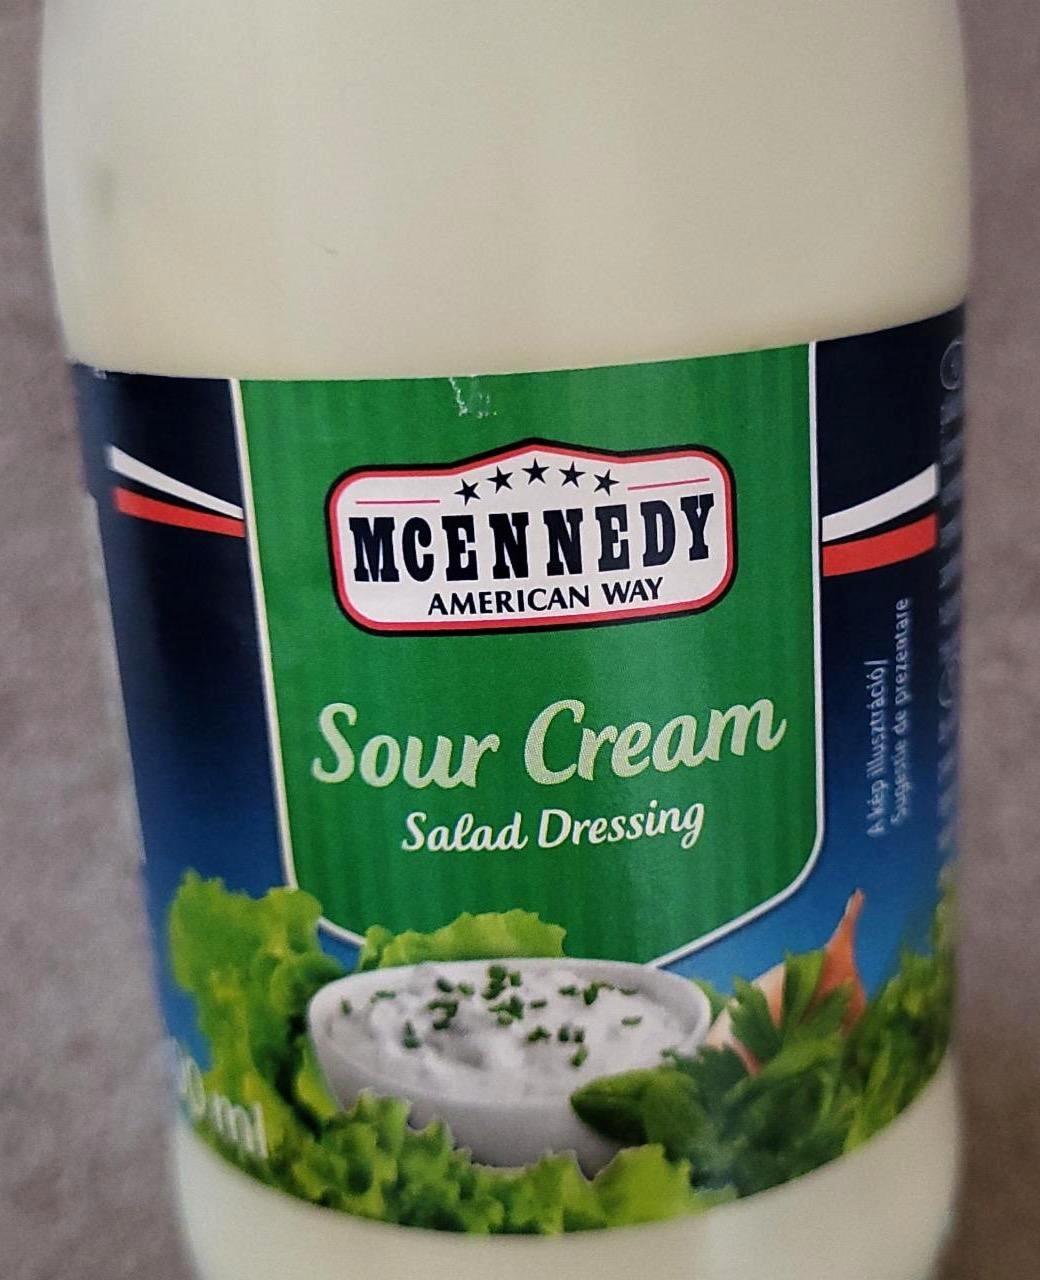 Képek - Sour cream Salad dressing McEnnedy